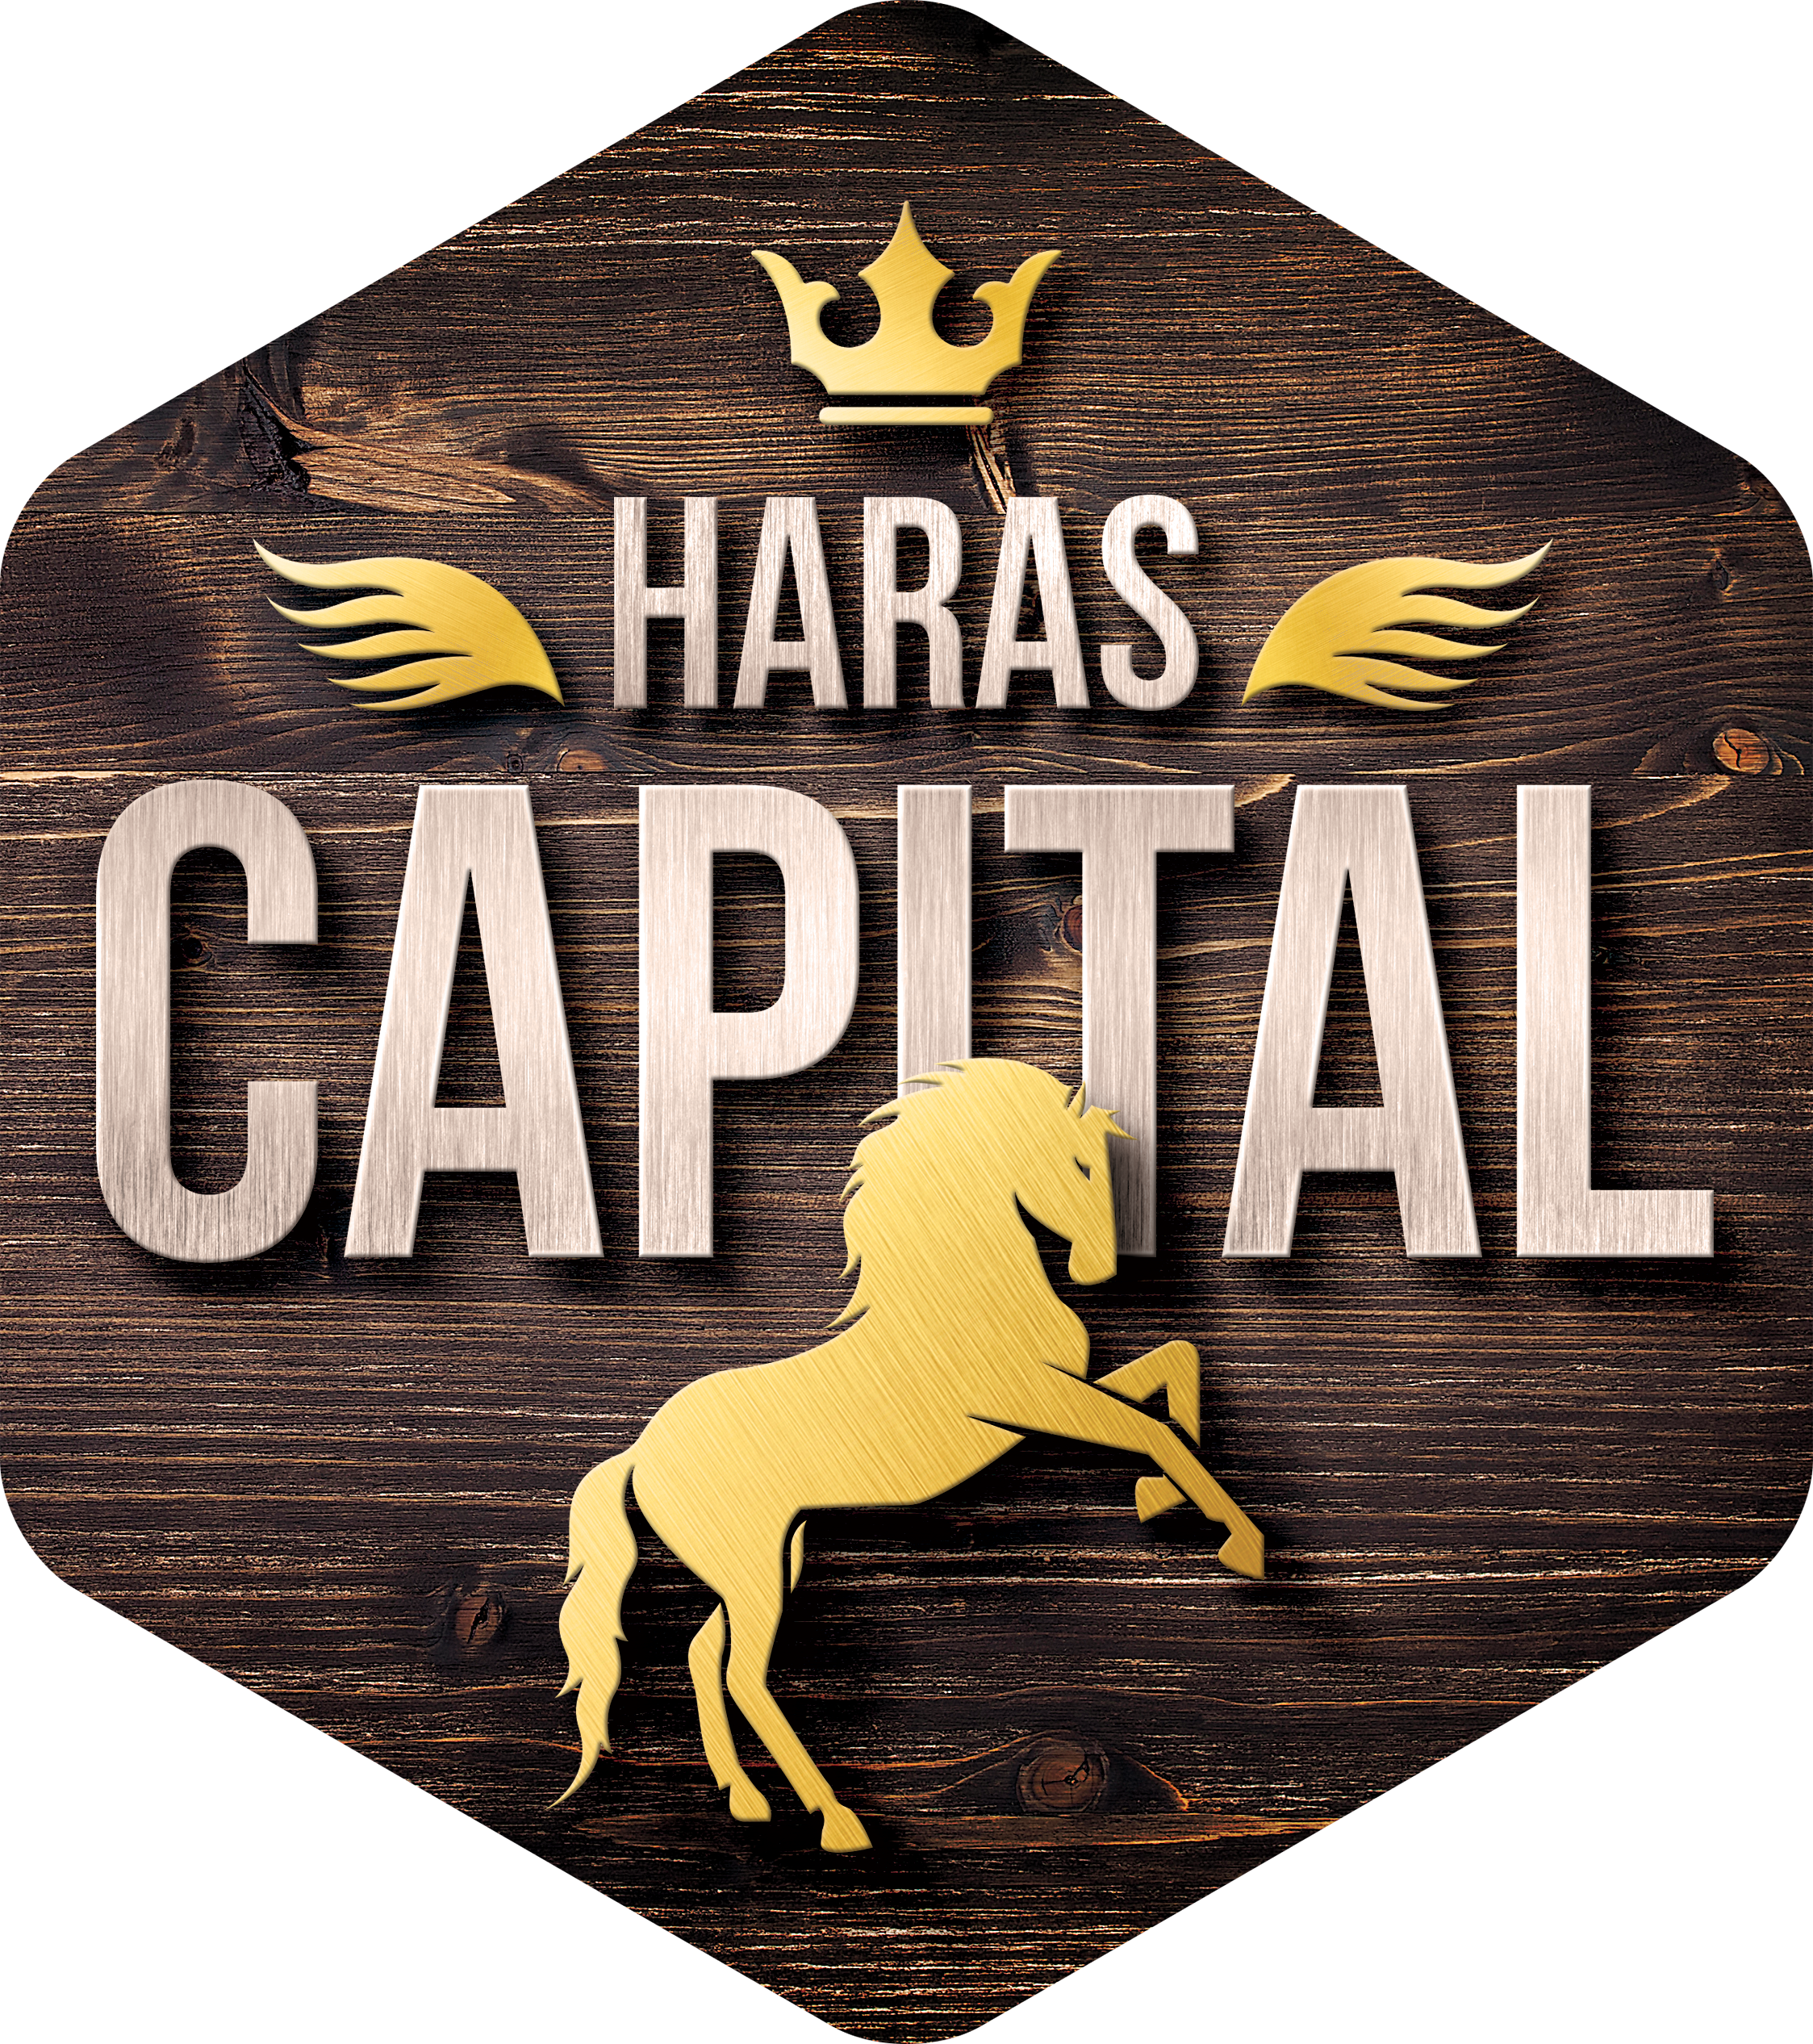 Haras Capital